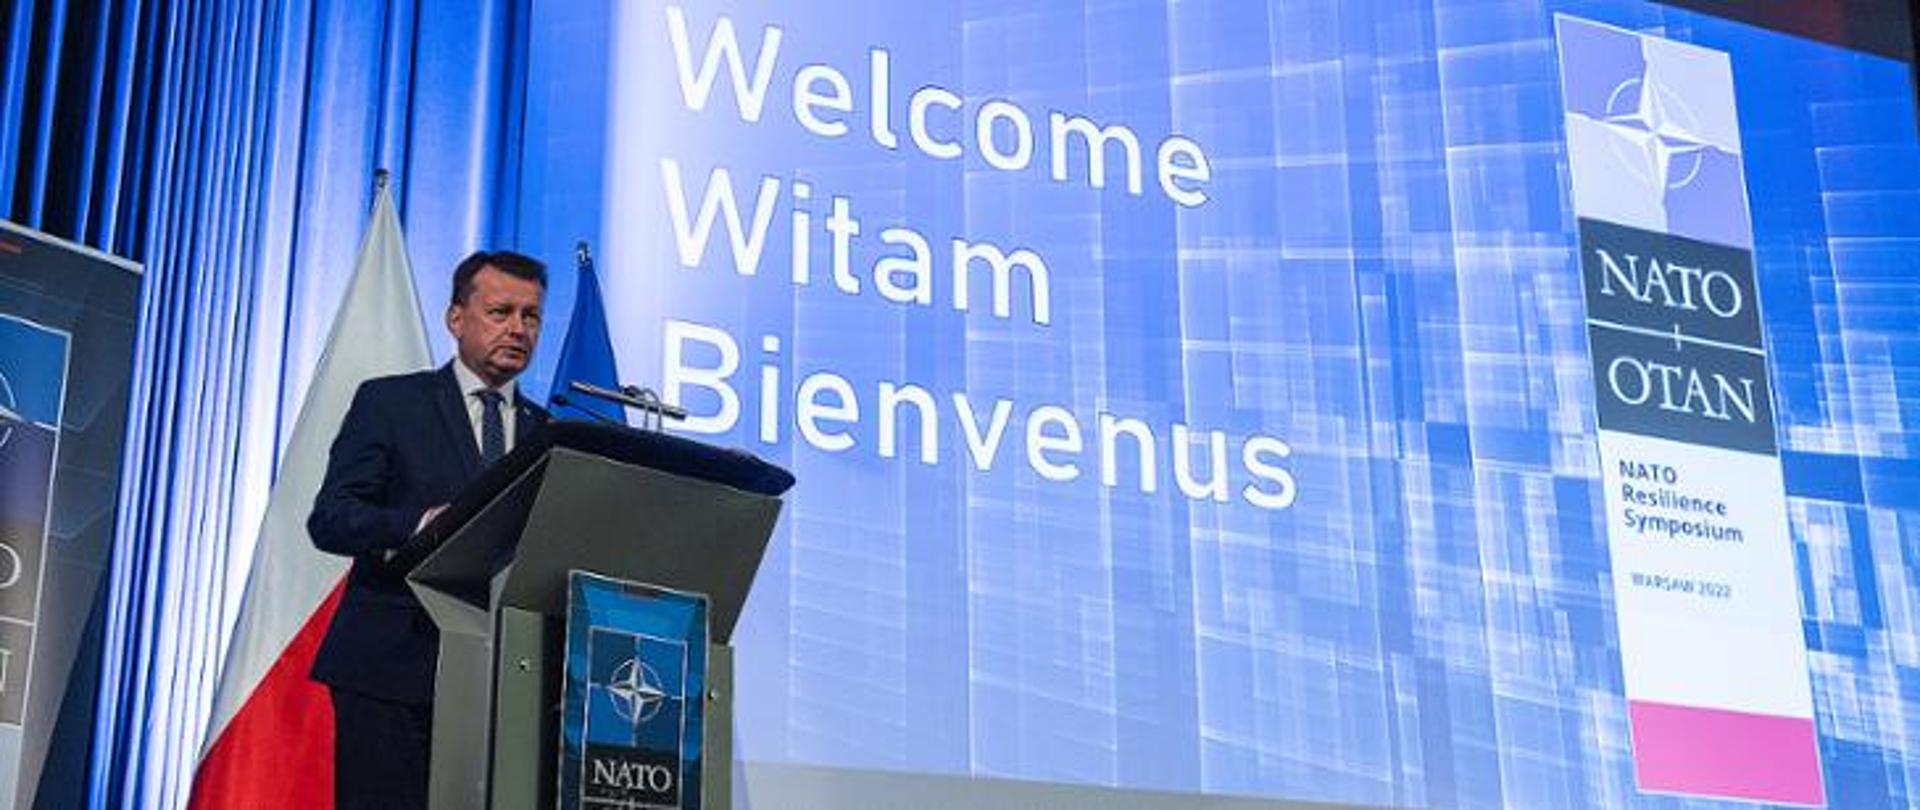 NATO Resilience Symposium 2022_